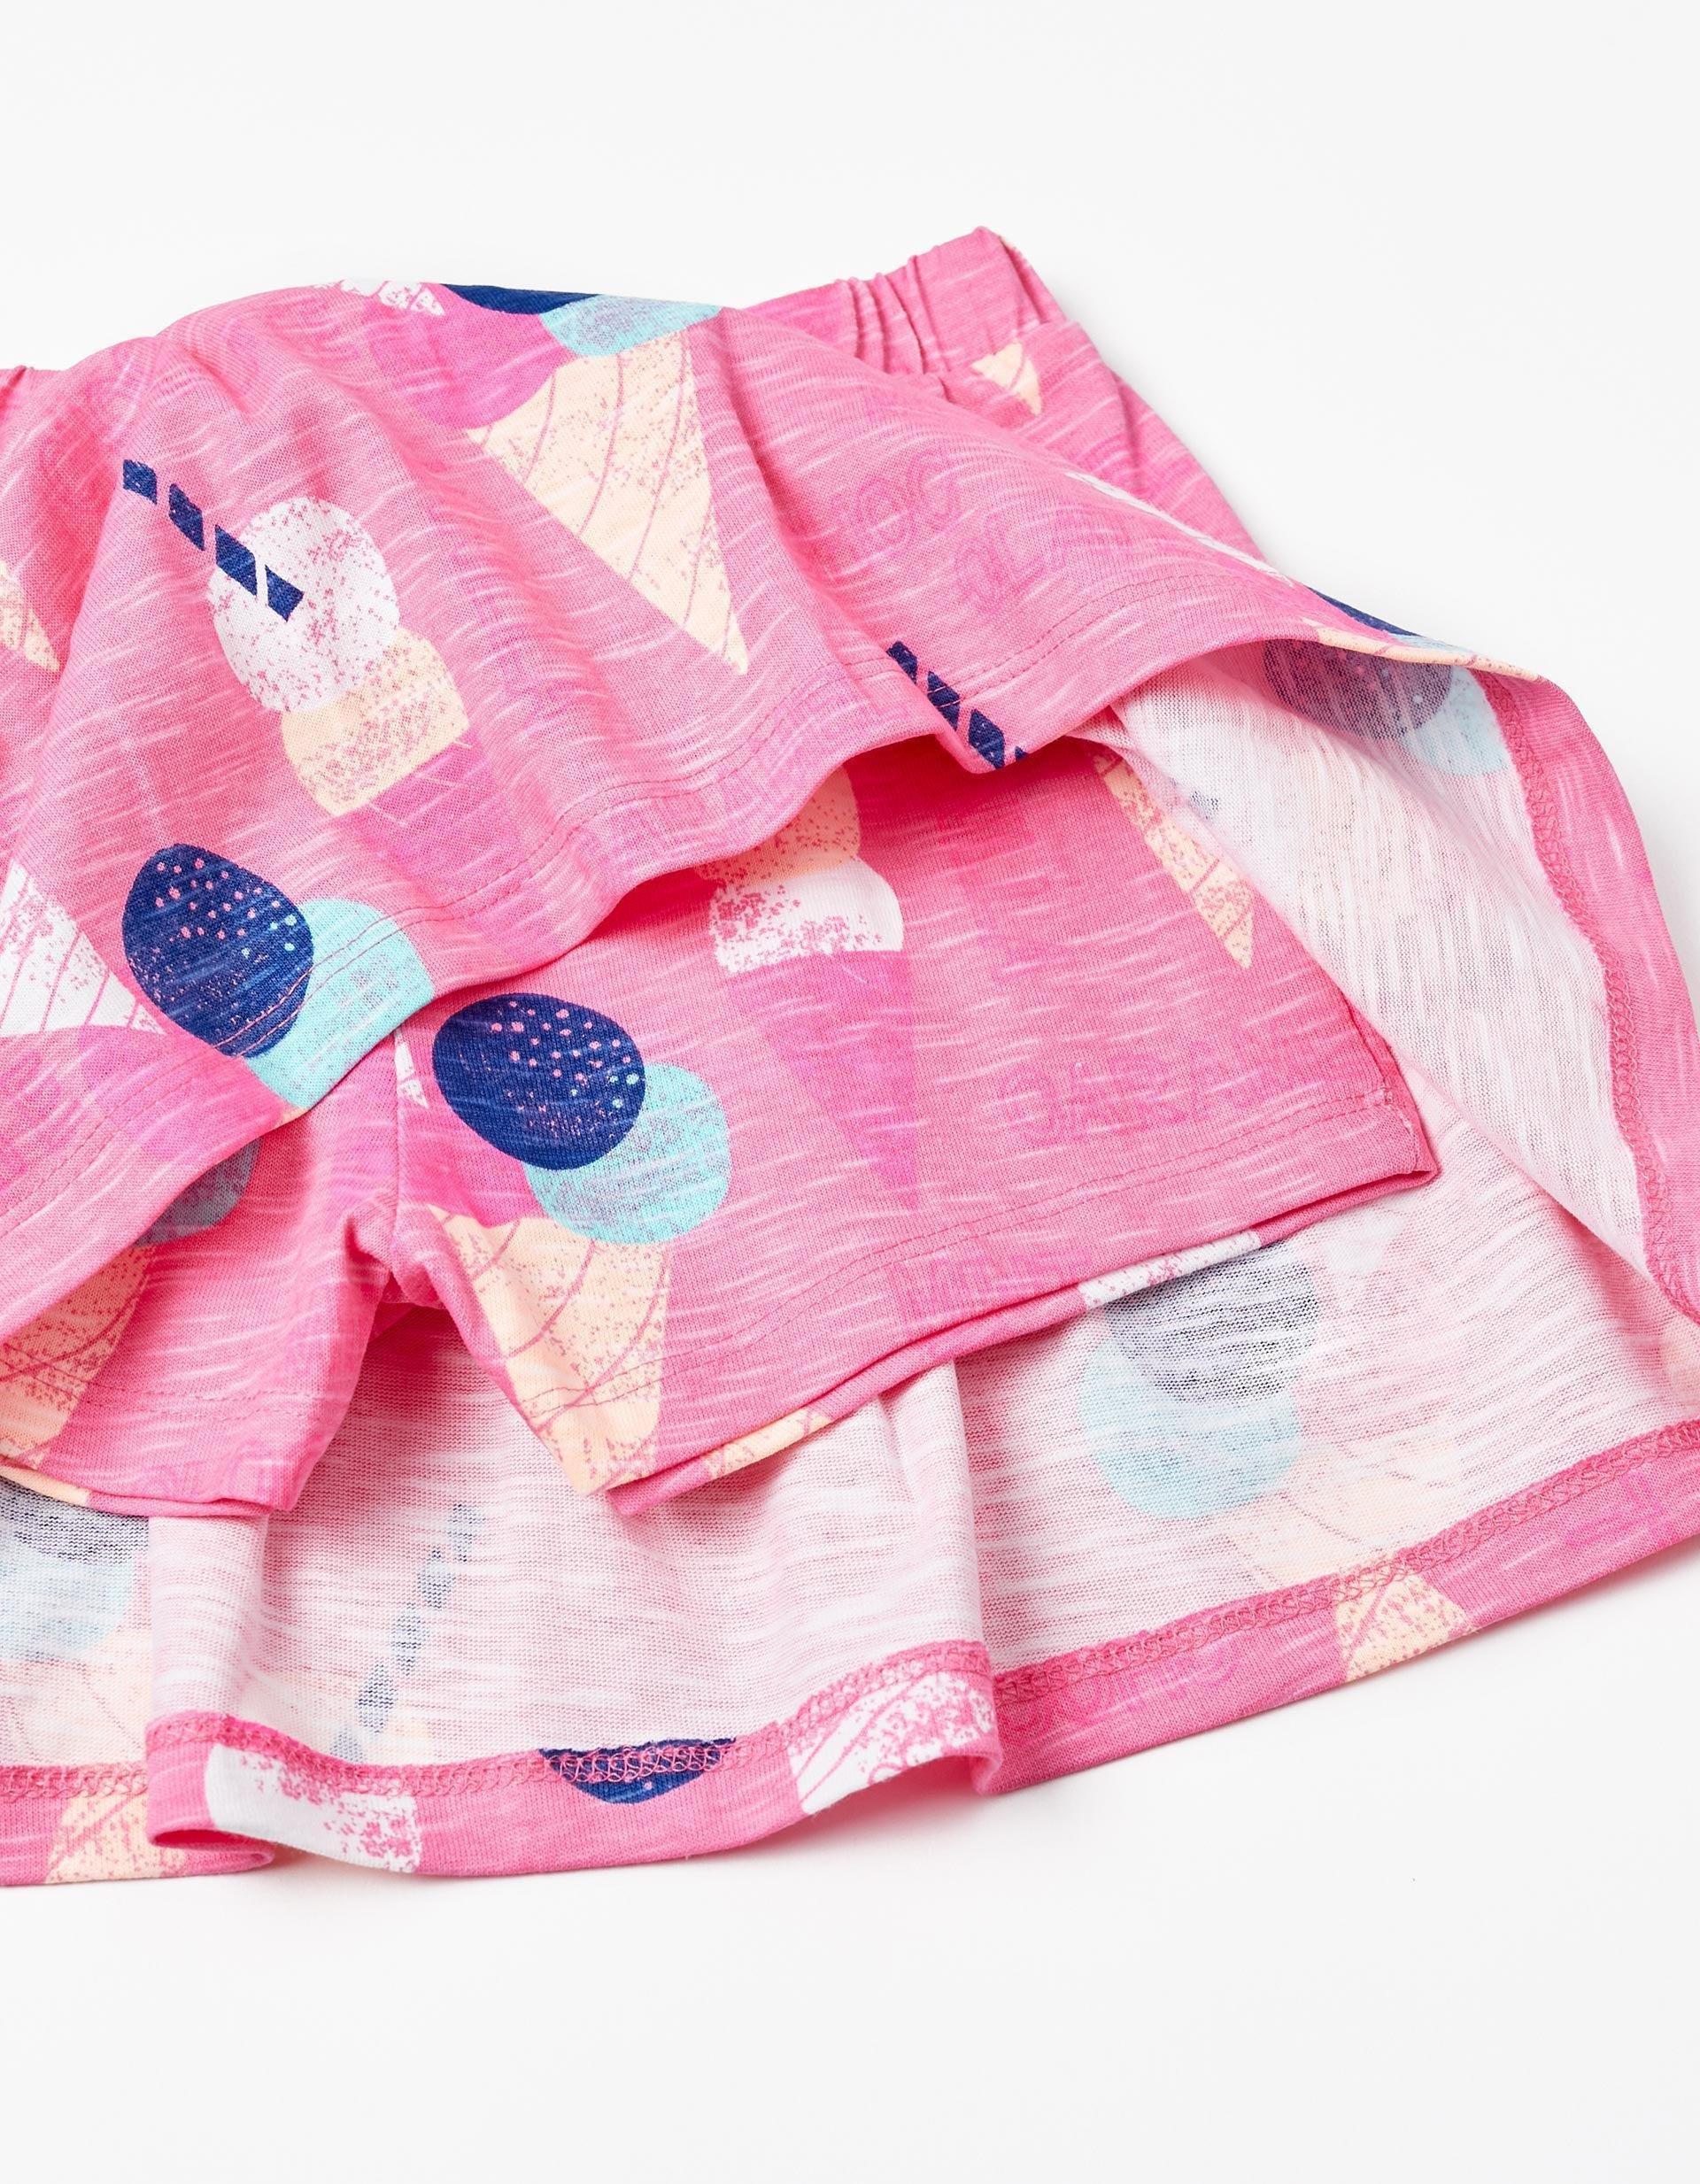 Zippy - Pink Patterned Mini Skirt, Kids Girls